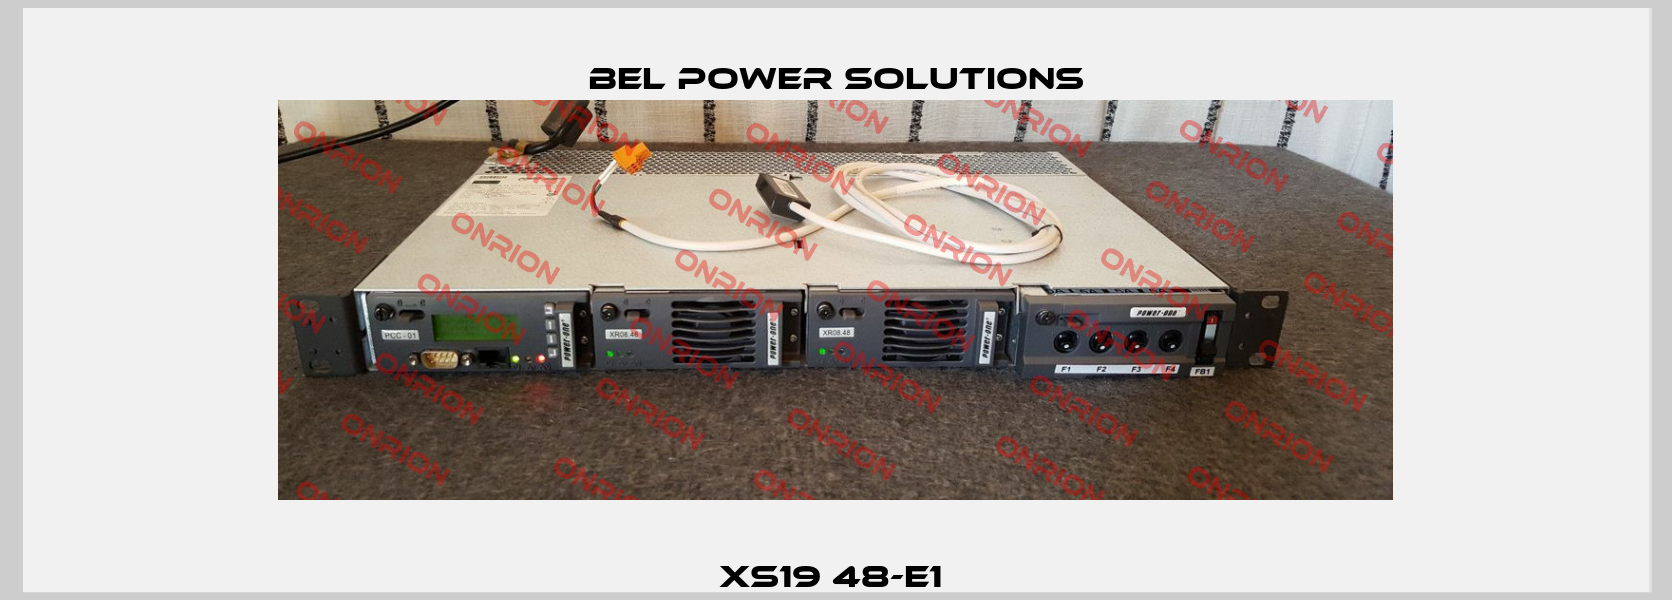 XS19 48-E1  Bel Power Solutions